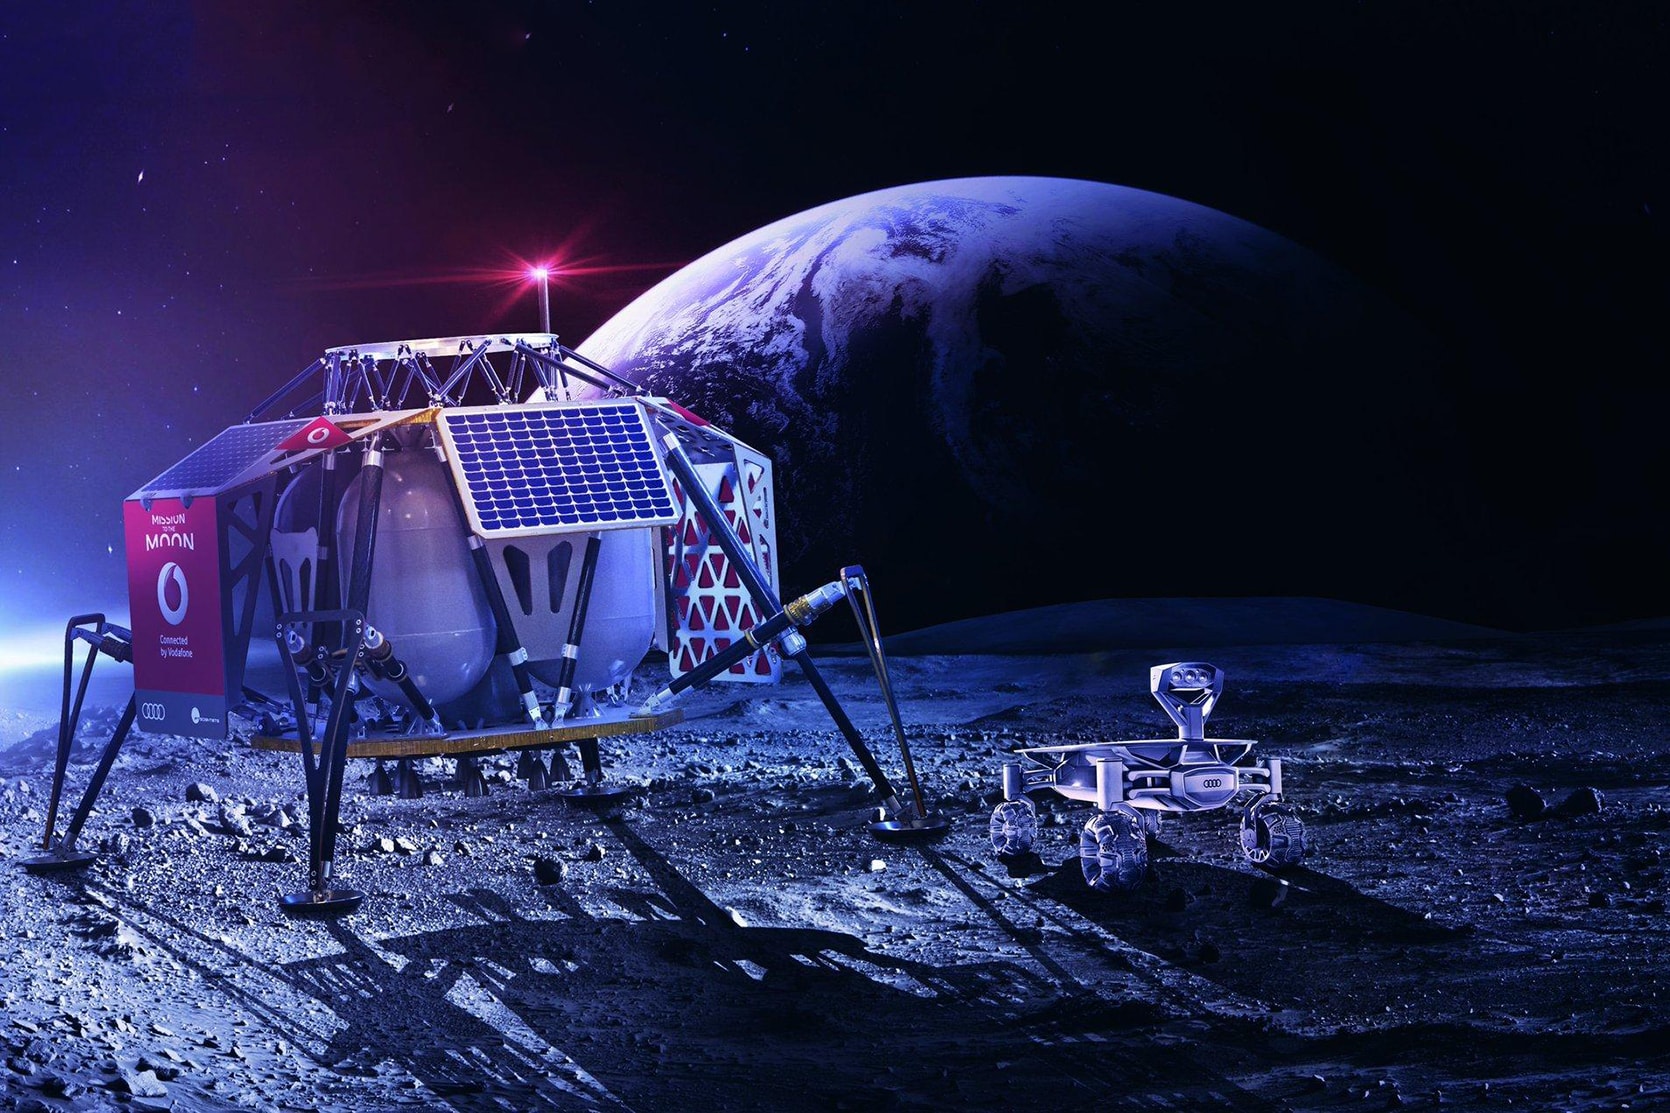 Moon 4G Network 2019 Vodafone Nokia Elon Musk SpaceX Tesla Audi Lunar Rover PTScientists